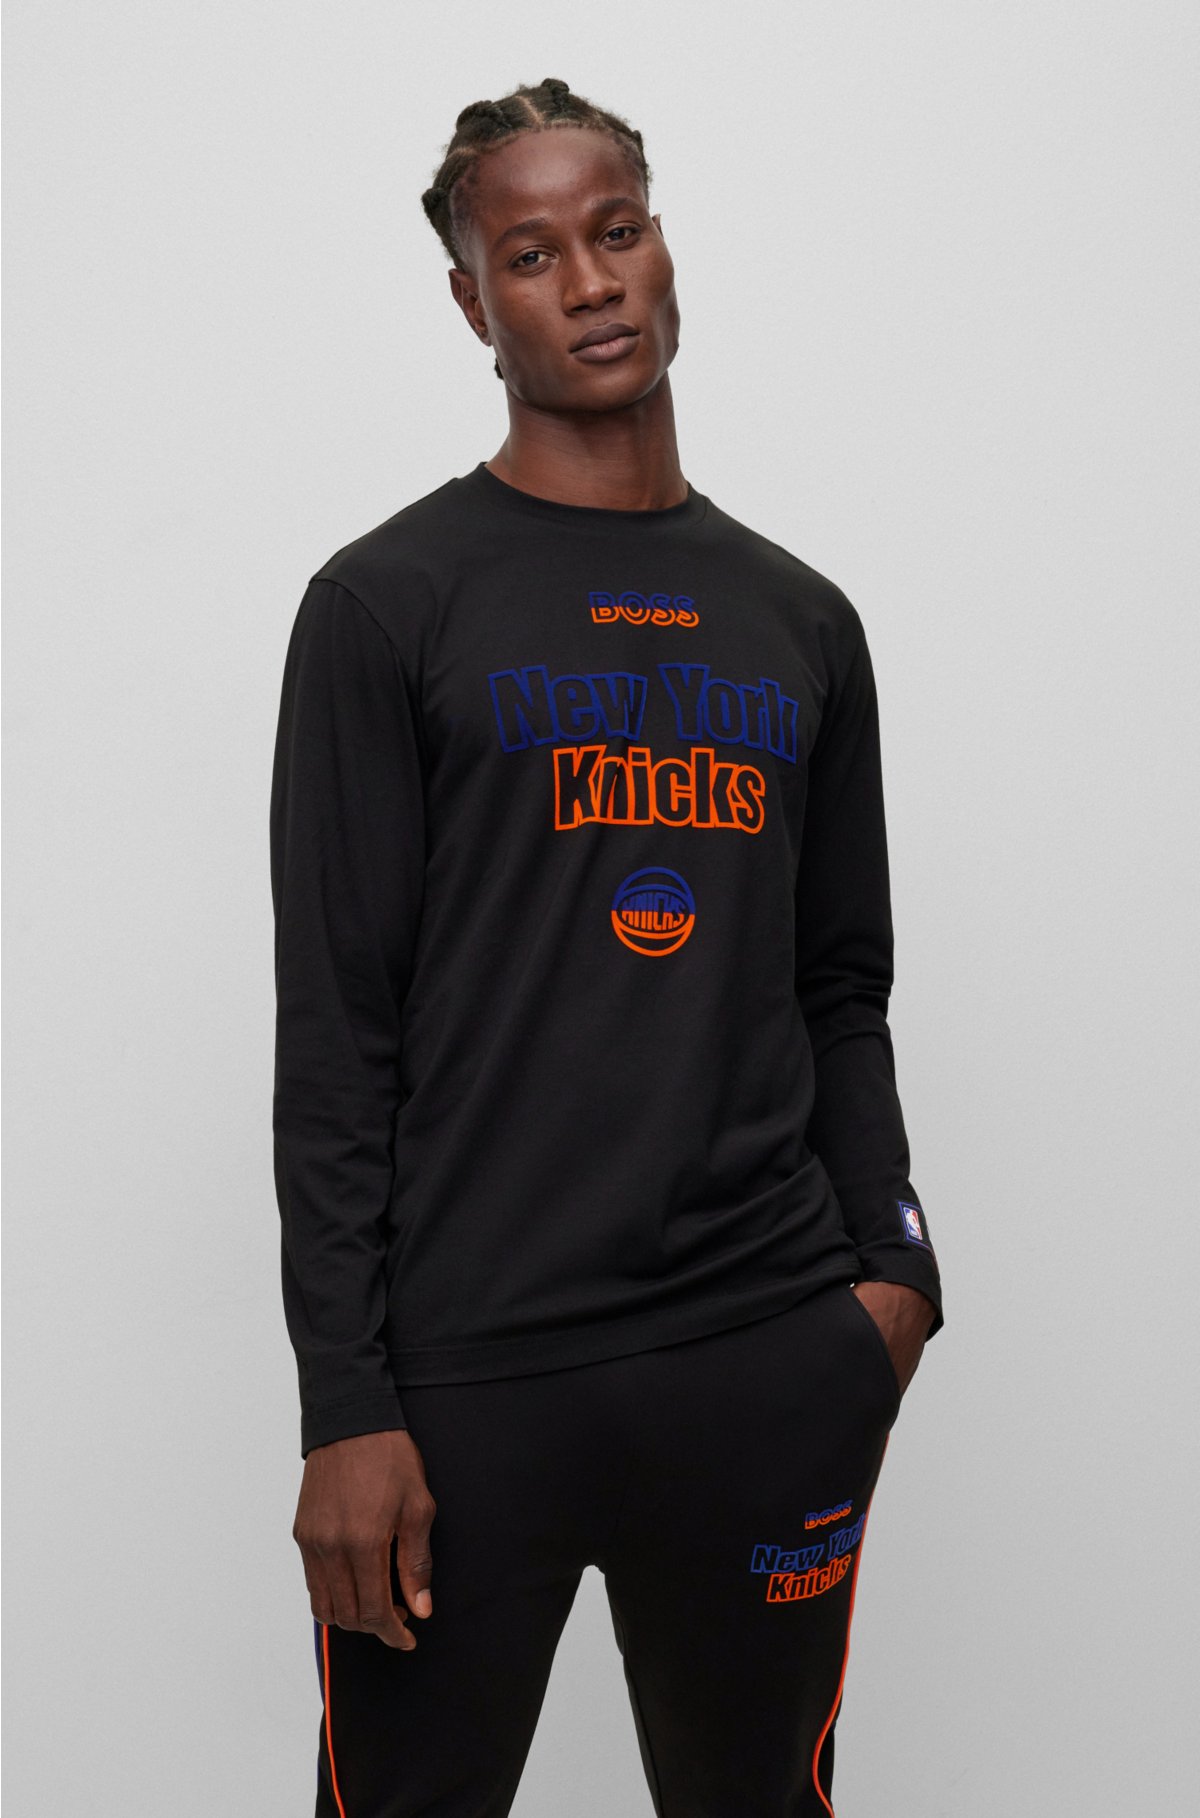 New York Knicks - New York Knicks - Long Sleeve T-Shirt